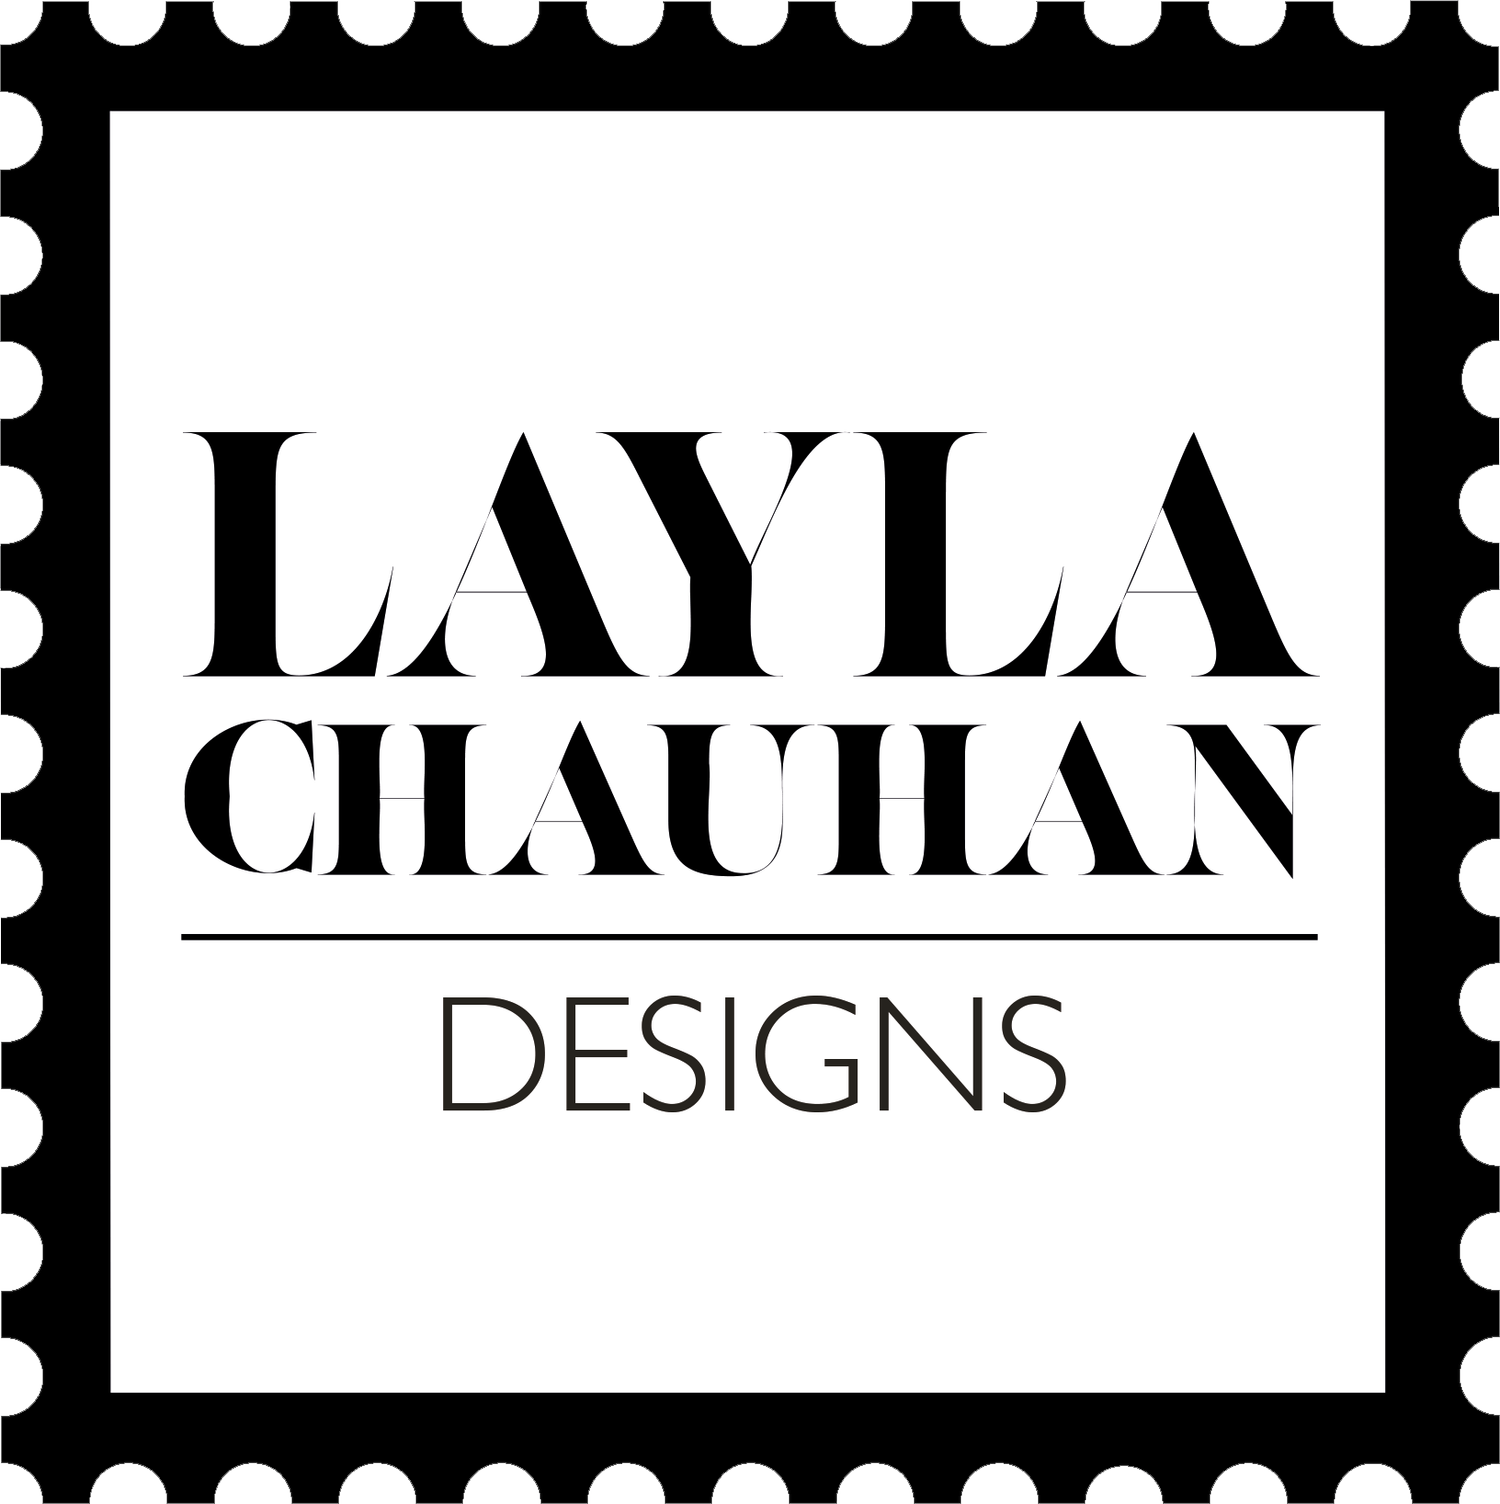 Layla Chauhan Designs